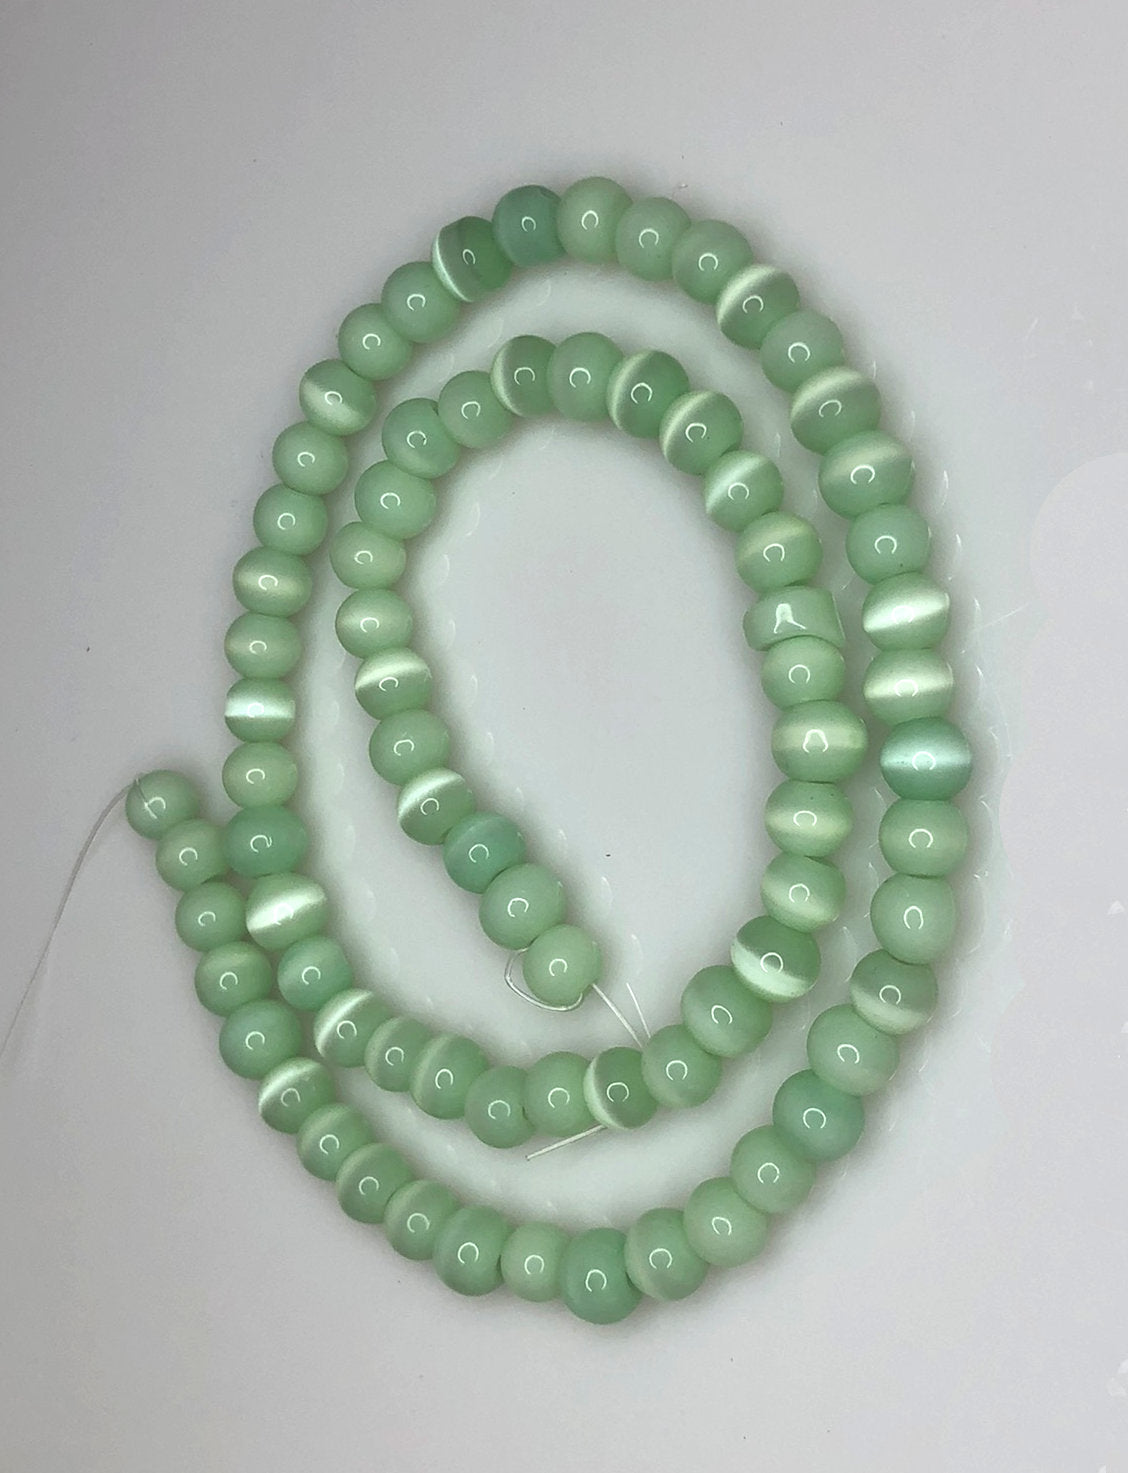 Green Cat's Eye Glass Round Beads, 6 mm - 15.5 Inch Strand